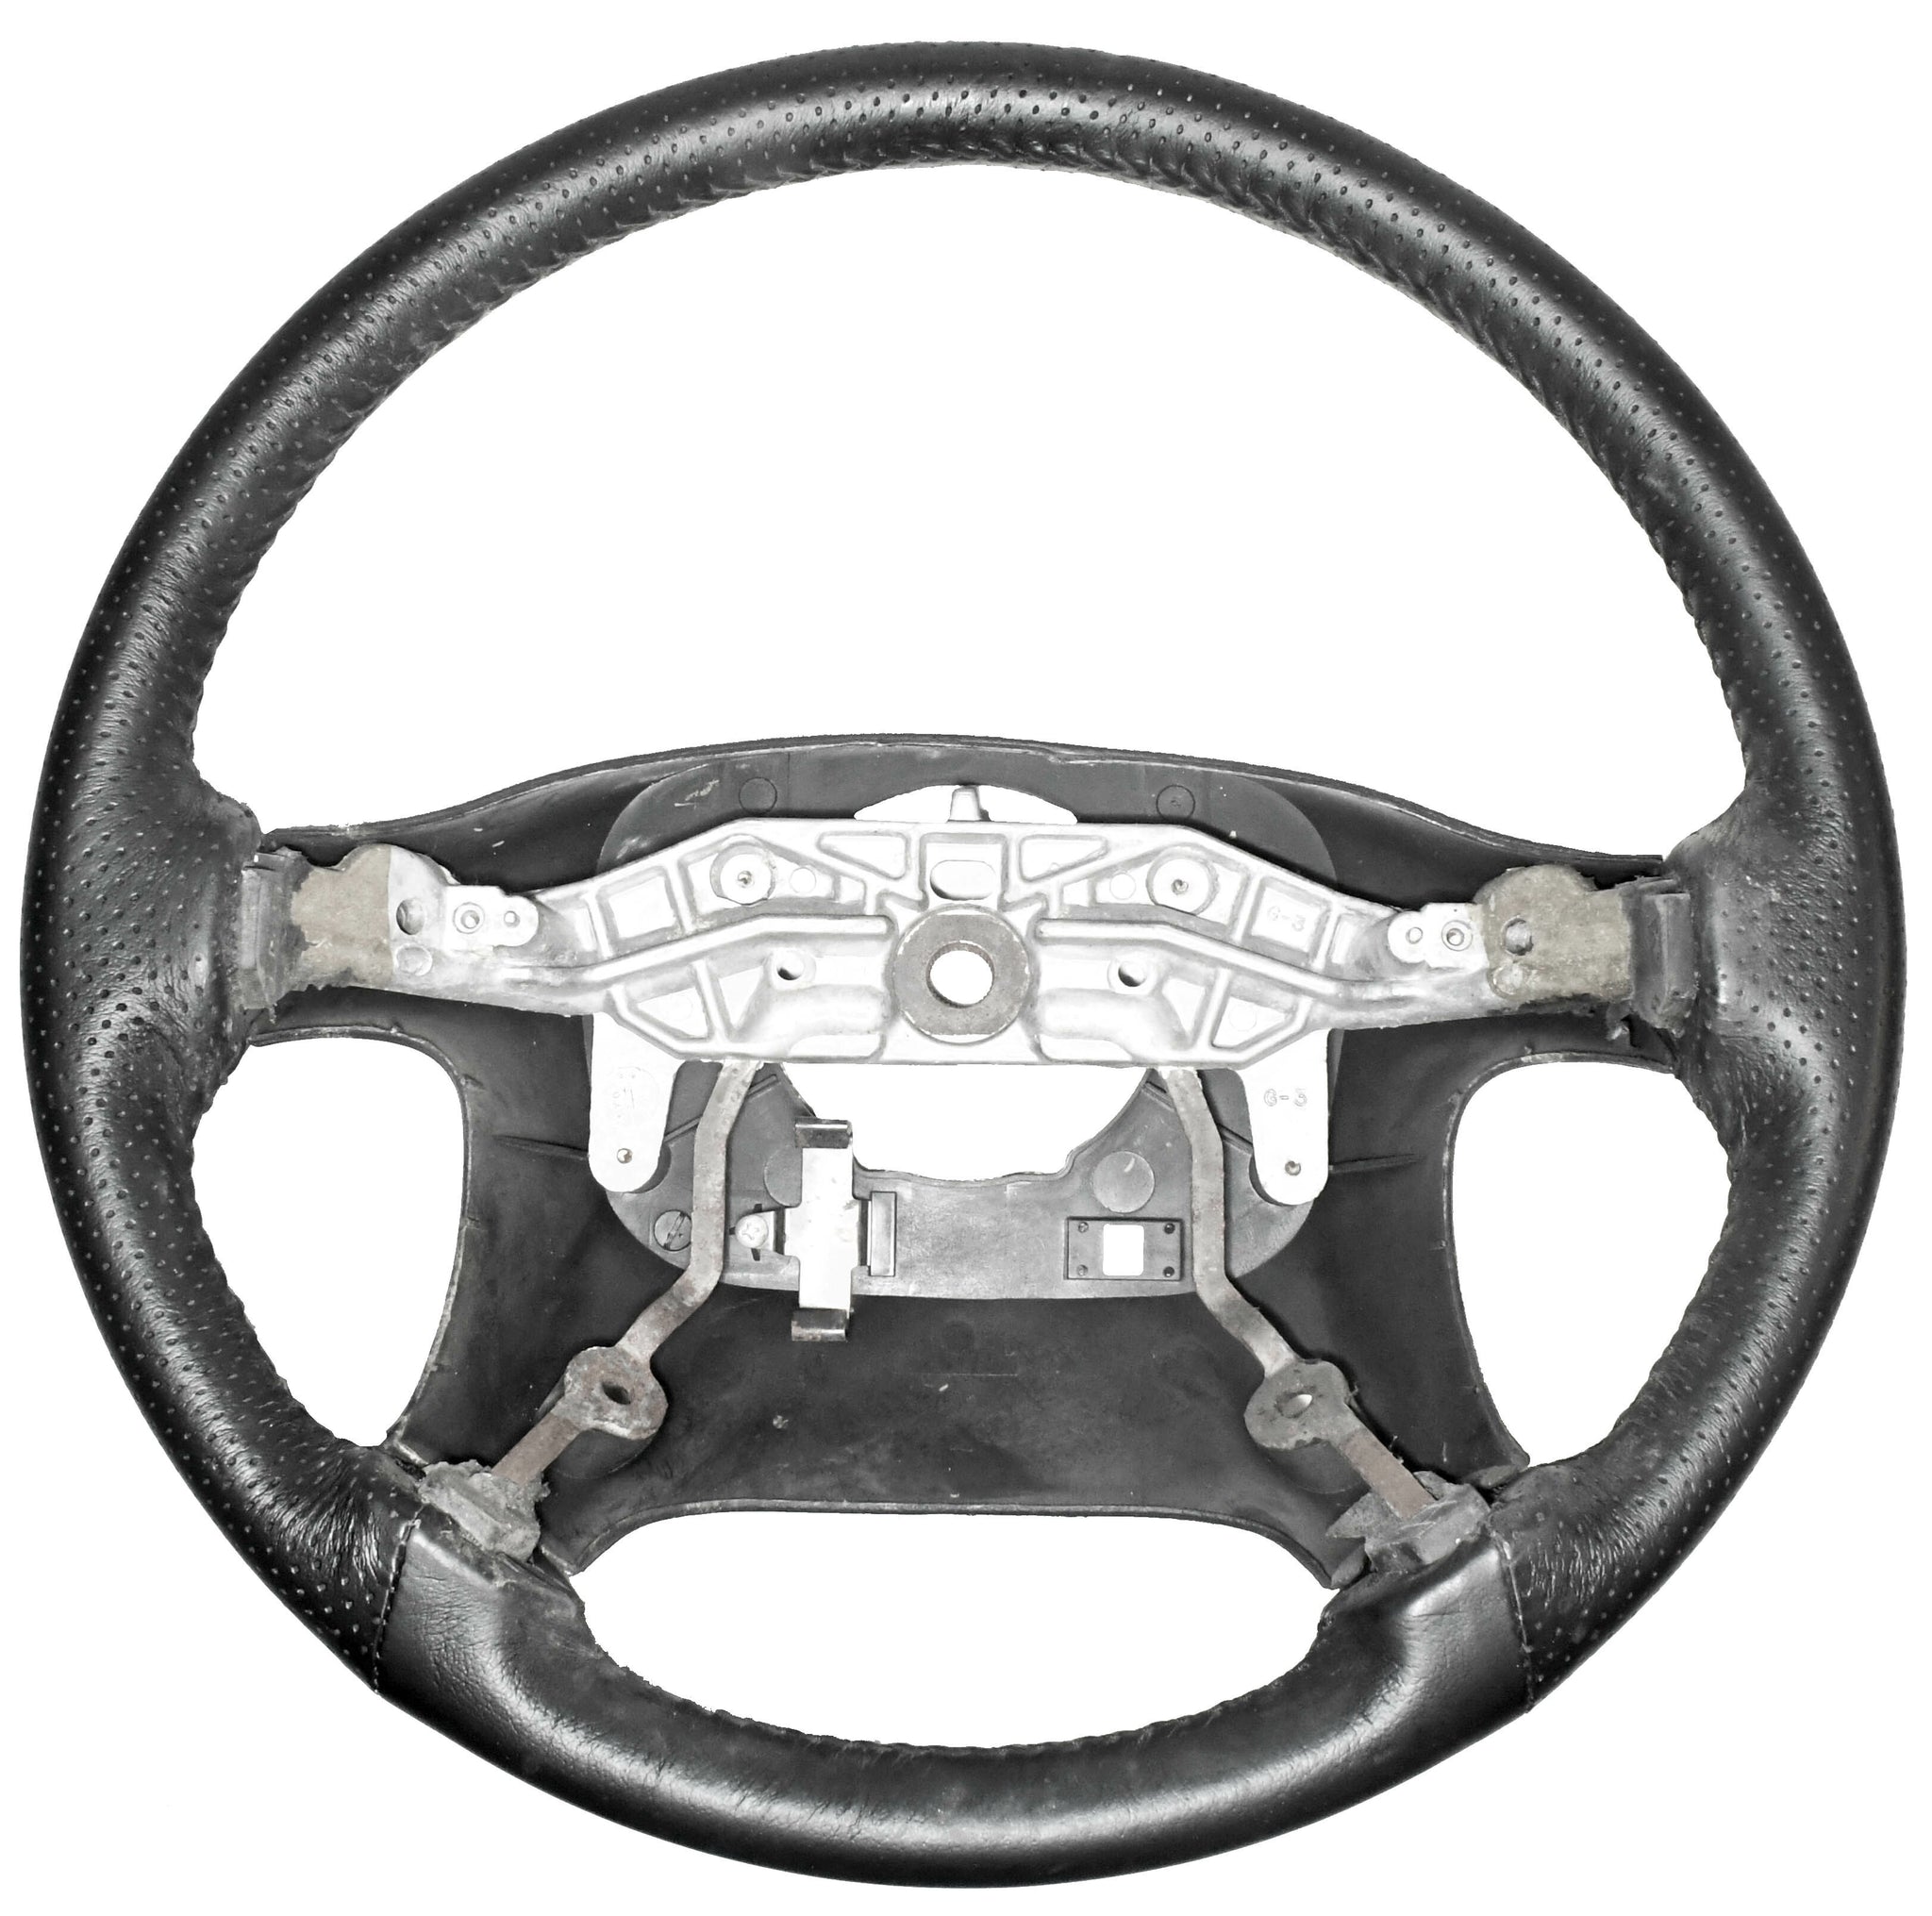 New steering wheel for 1993-1997 Ford Probe F32Z-3600-B